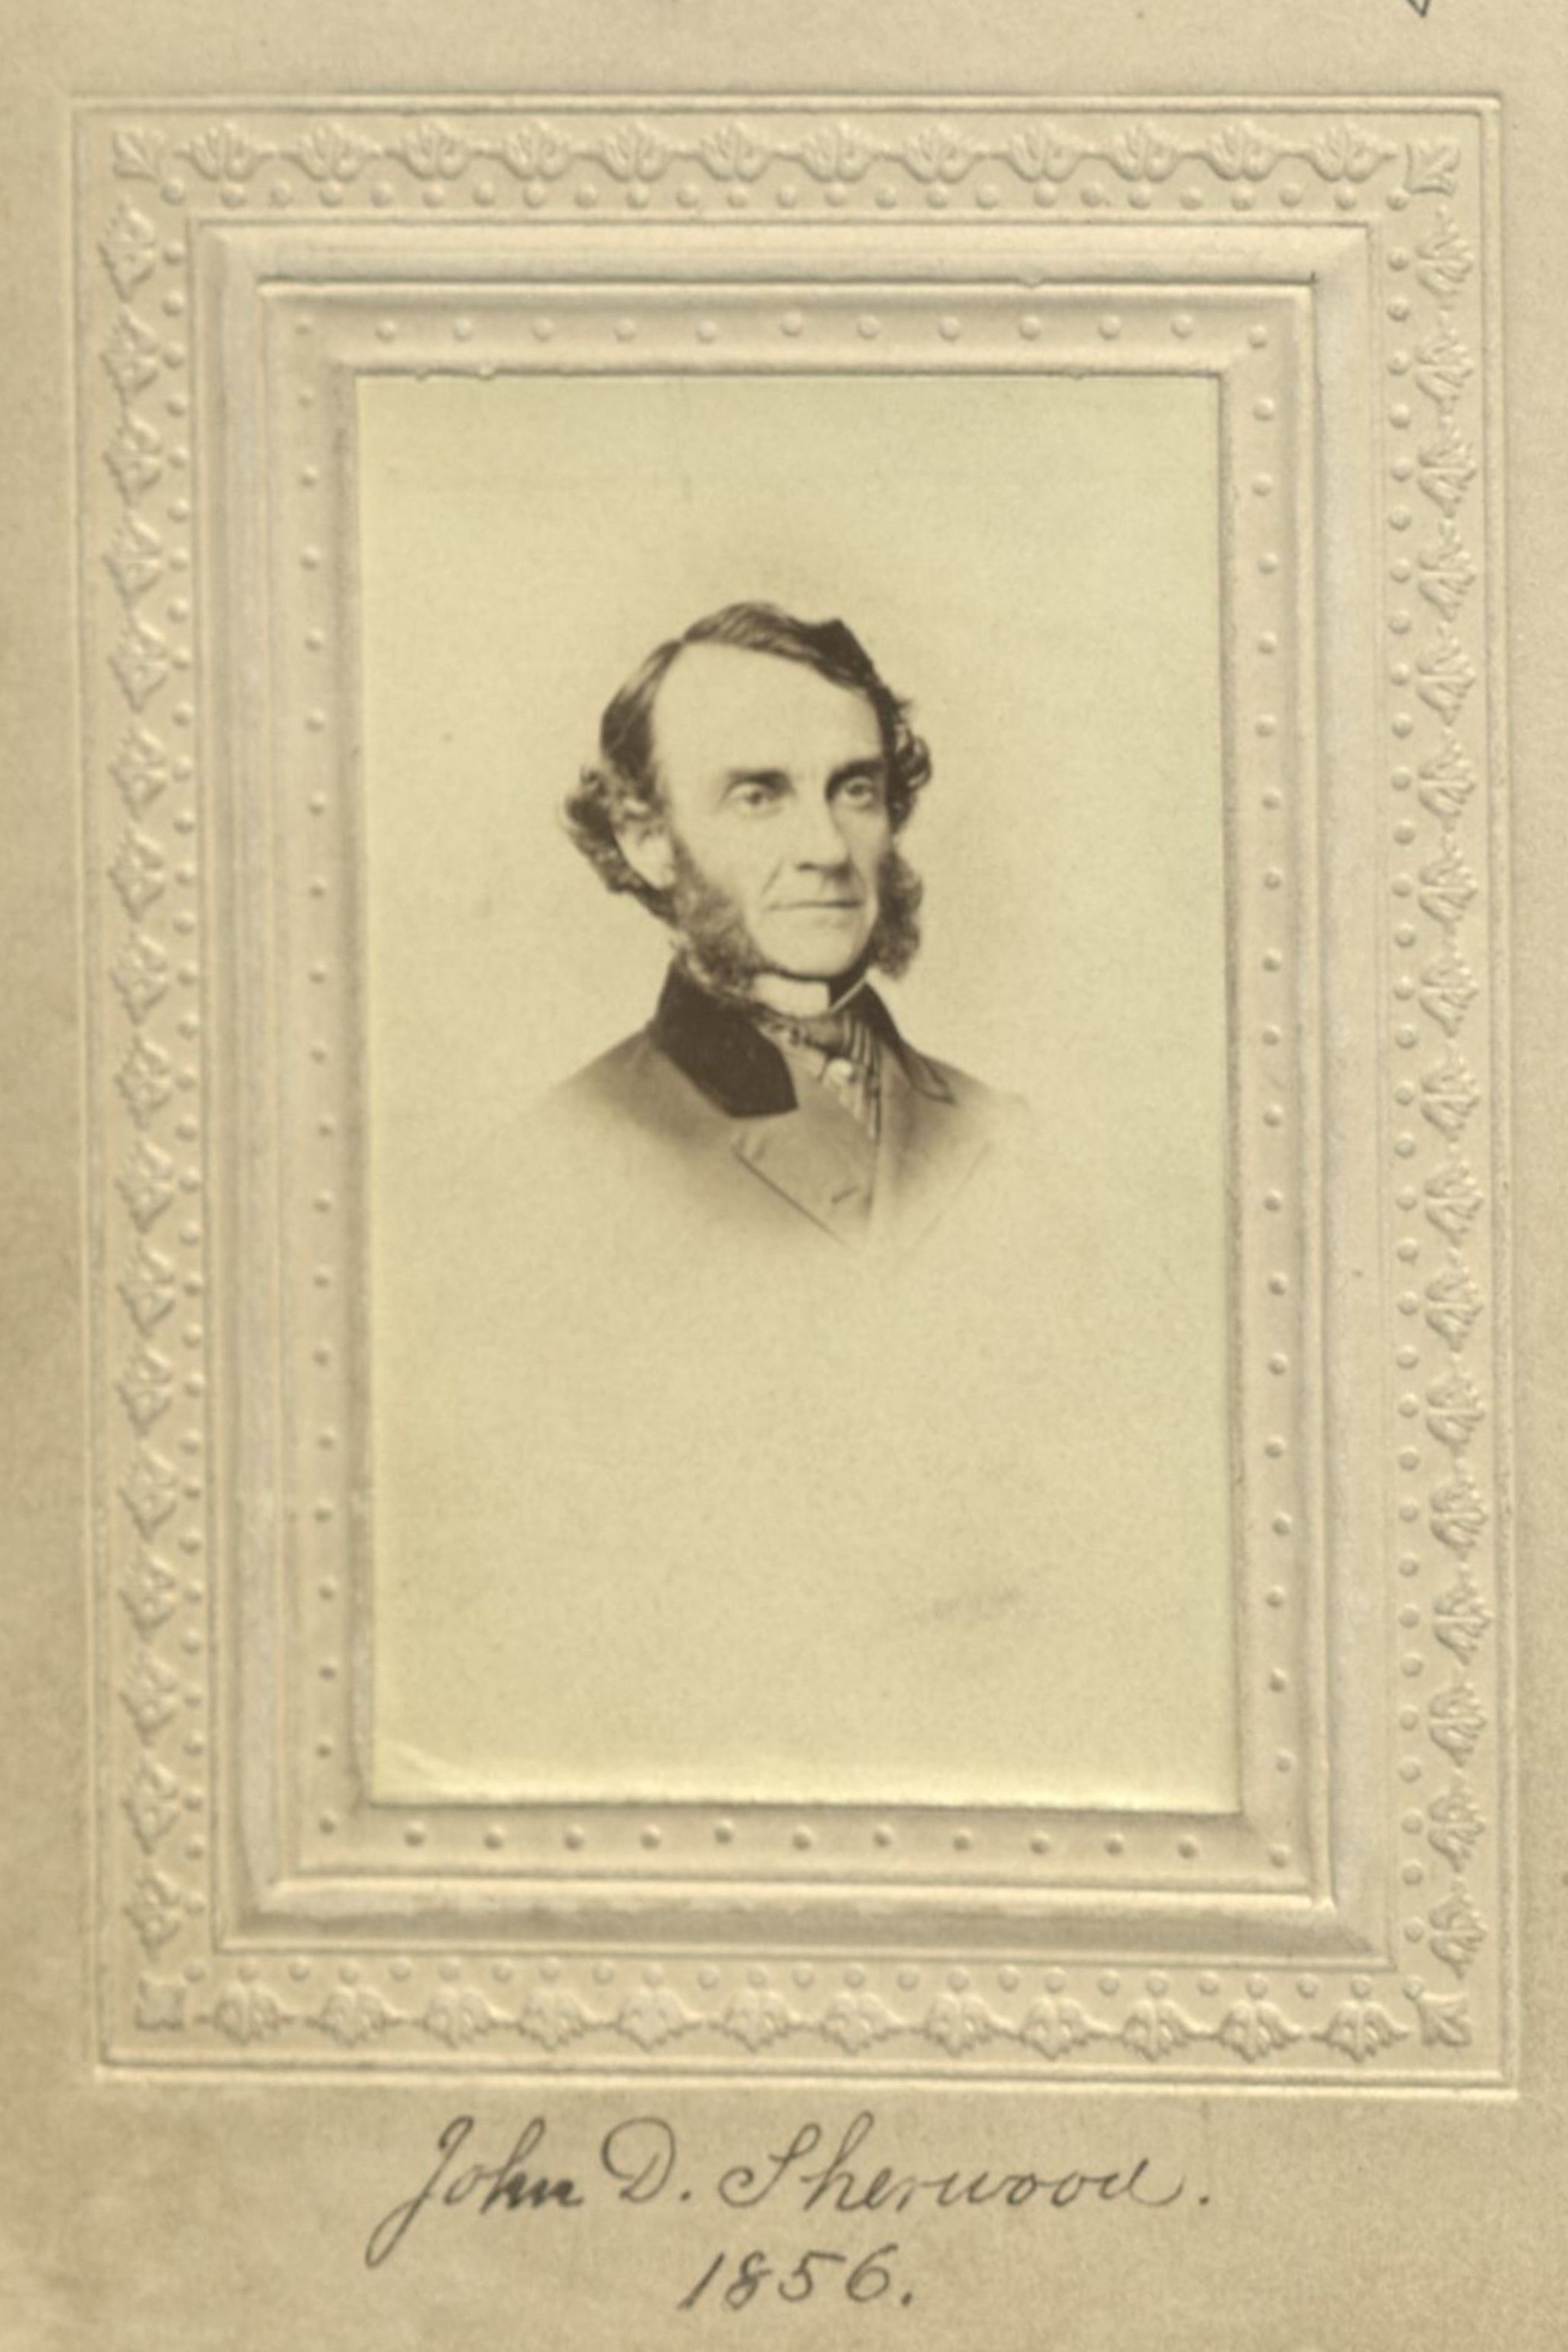 Member portrait of John D. Sherwood